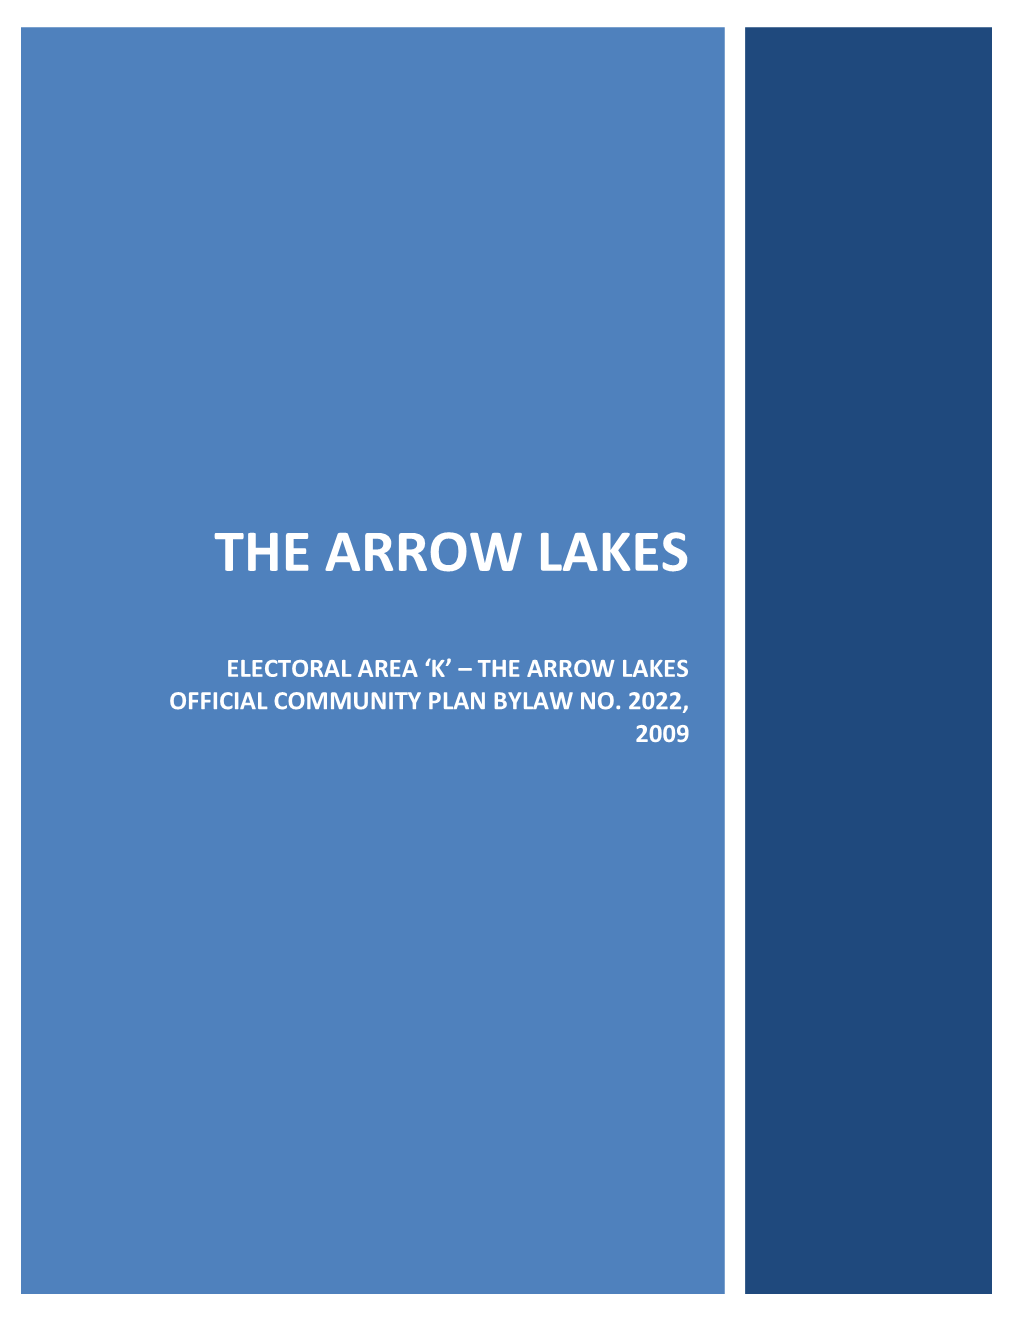 The Arrow Lakes